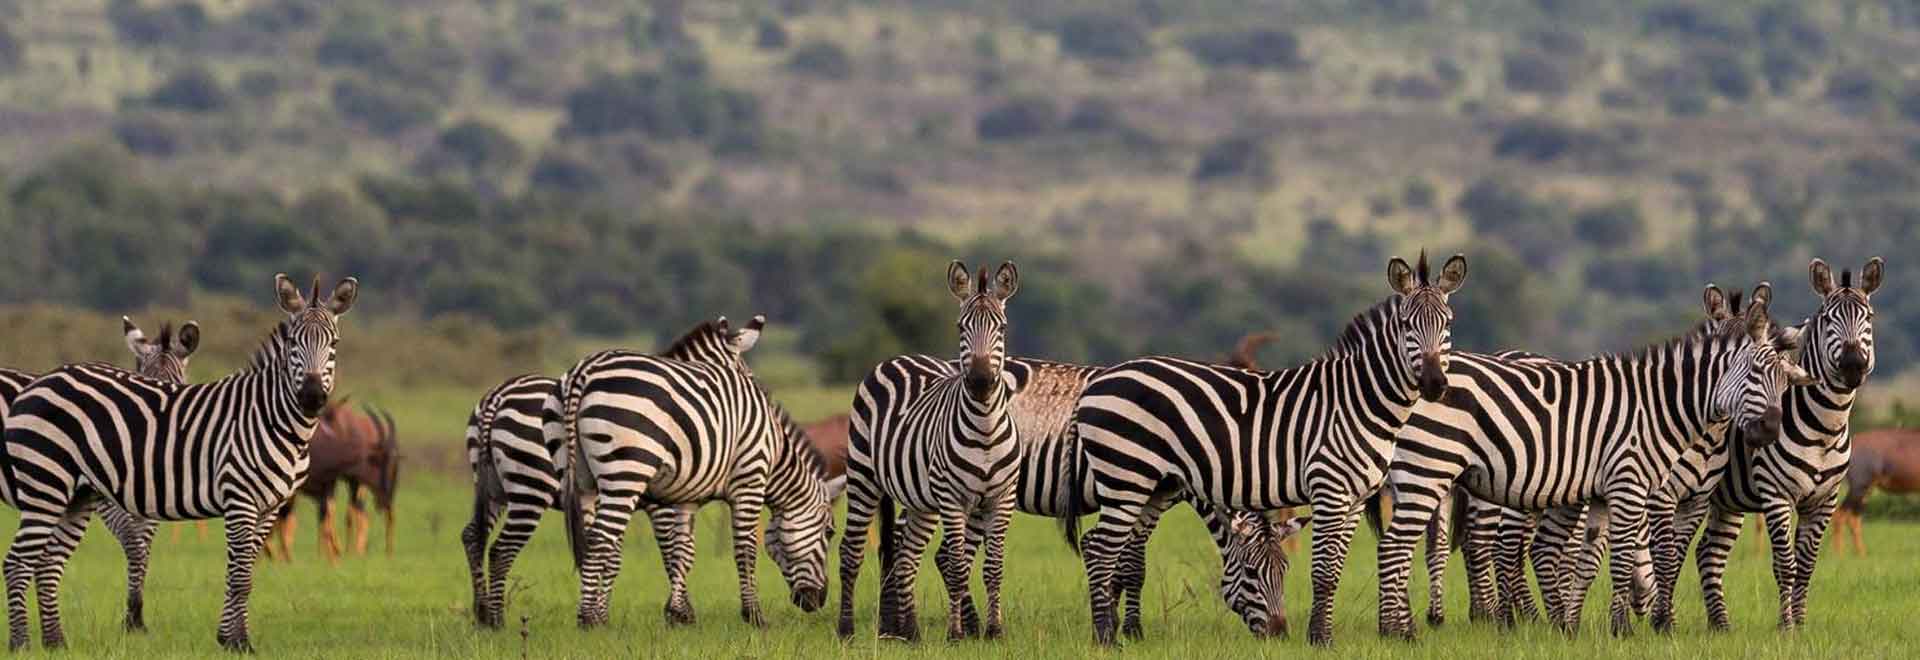 zebra in akagera national park